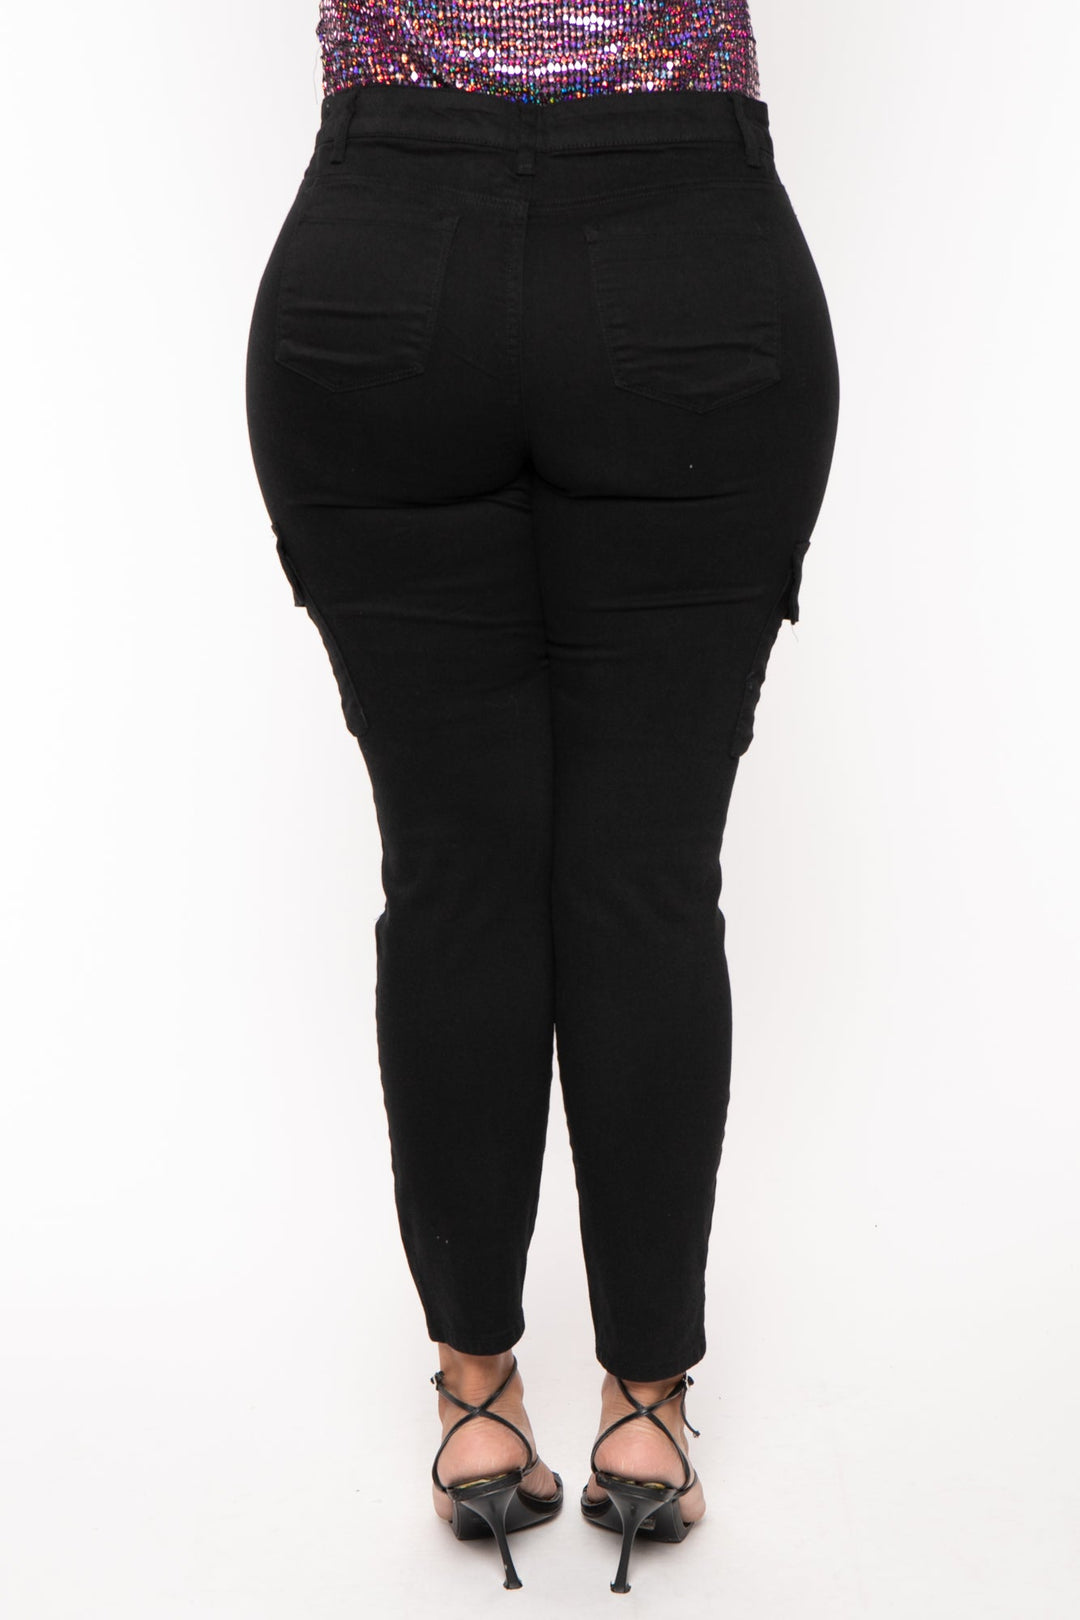 Wax Jean Bottoms Plus Size Cargo Skinny Leg Pants - Black